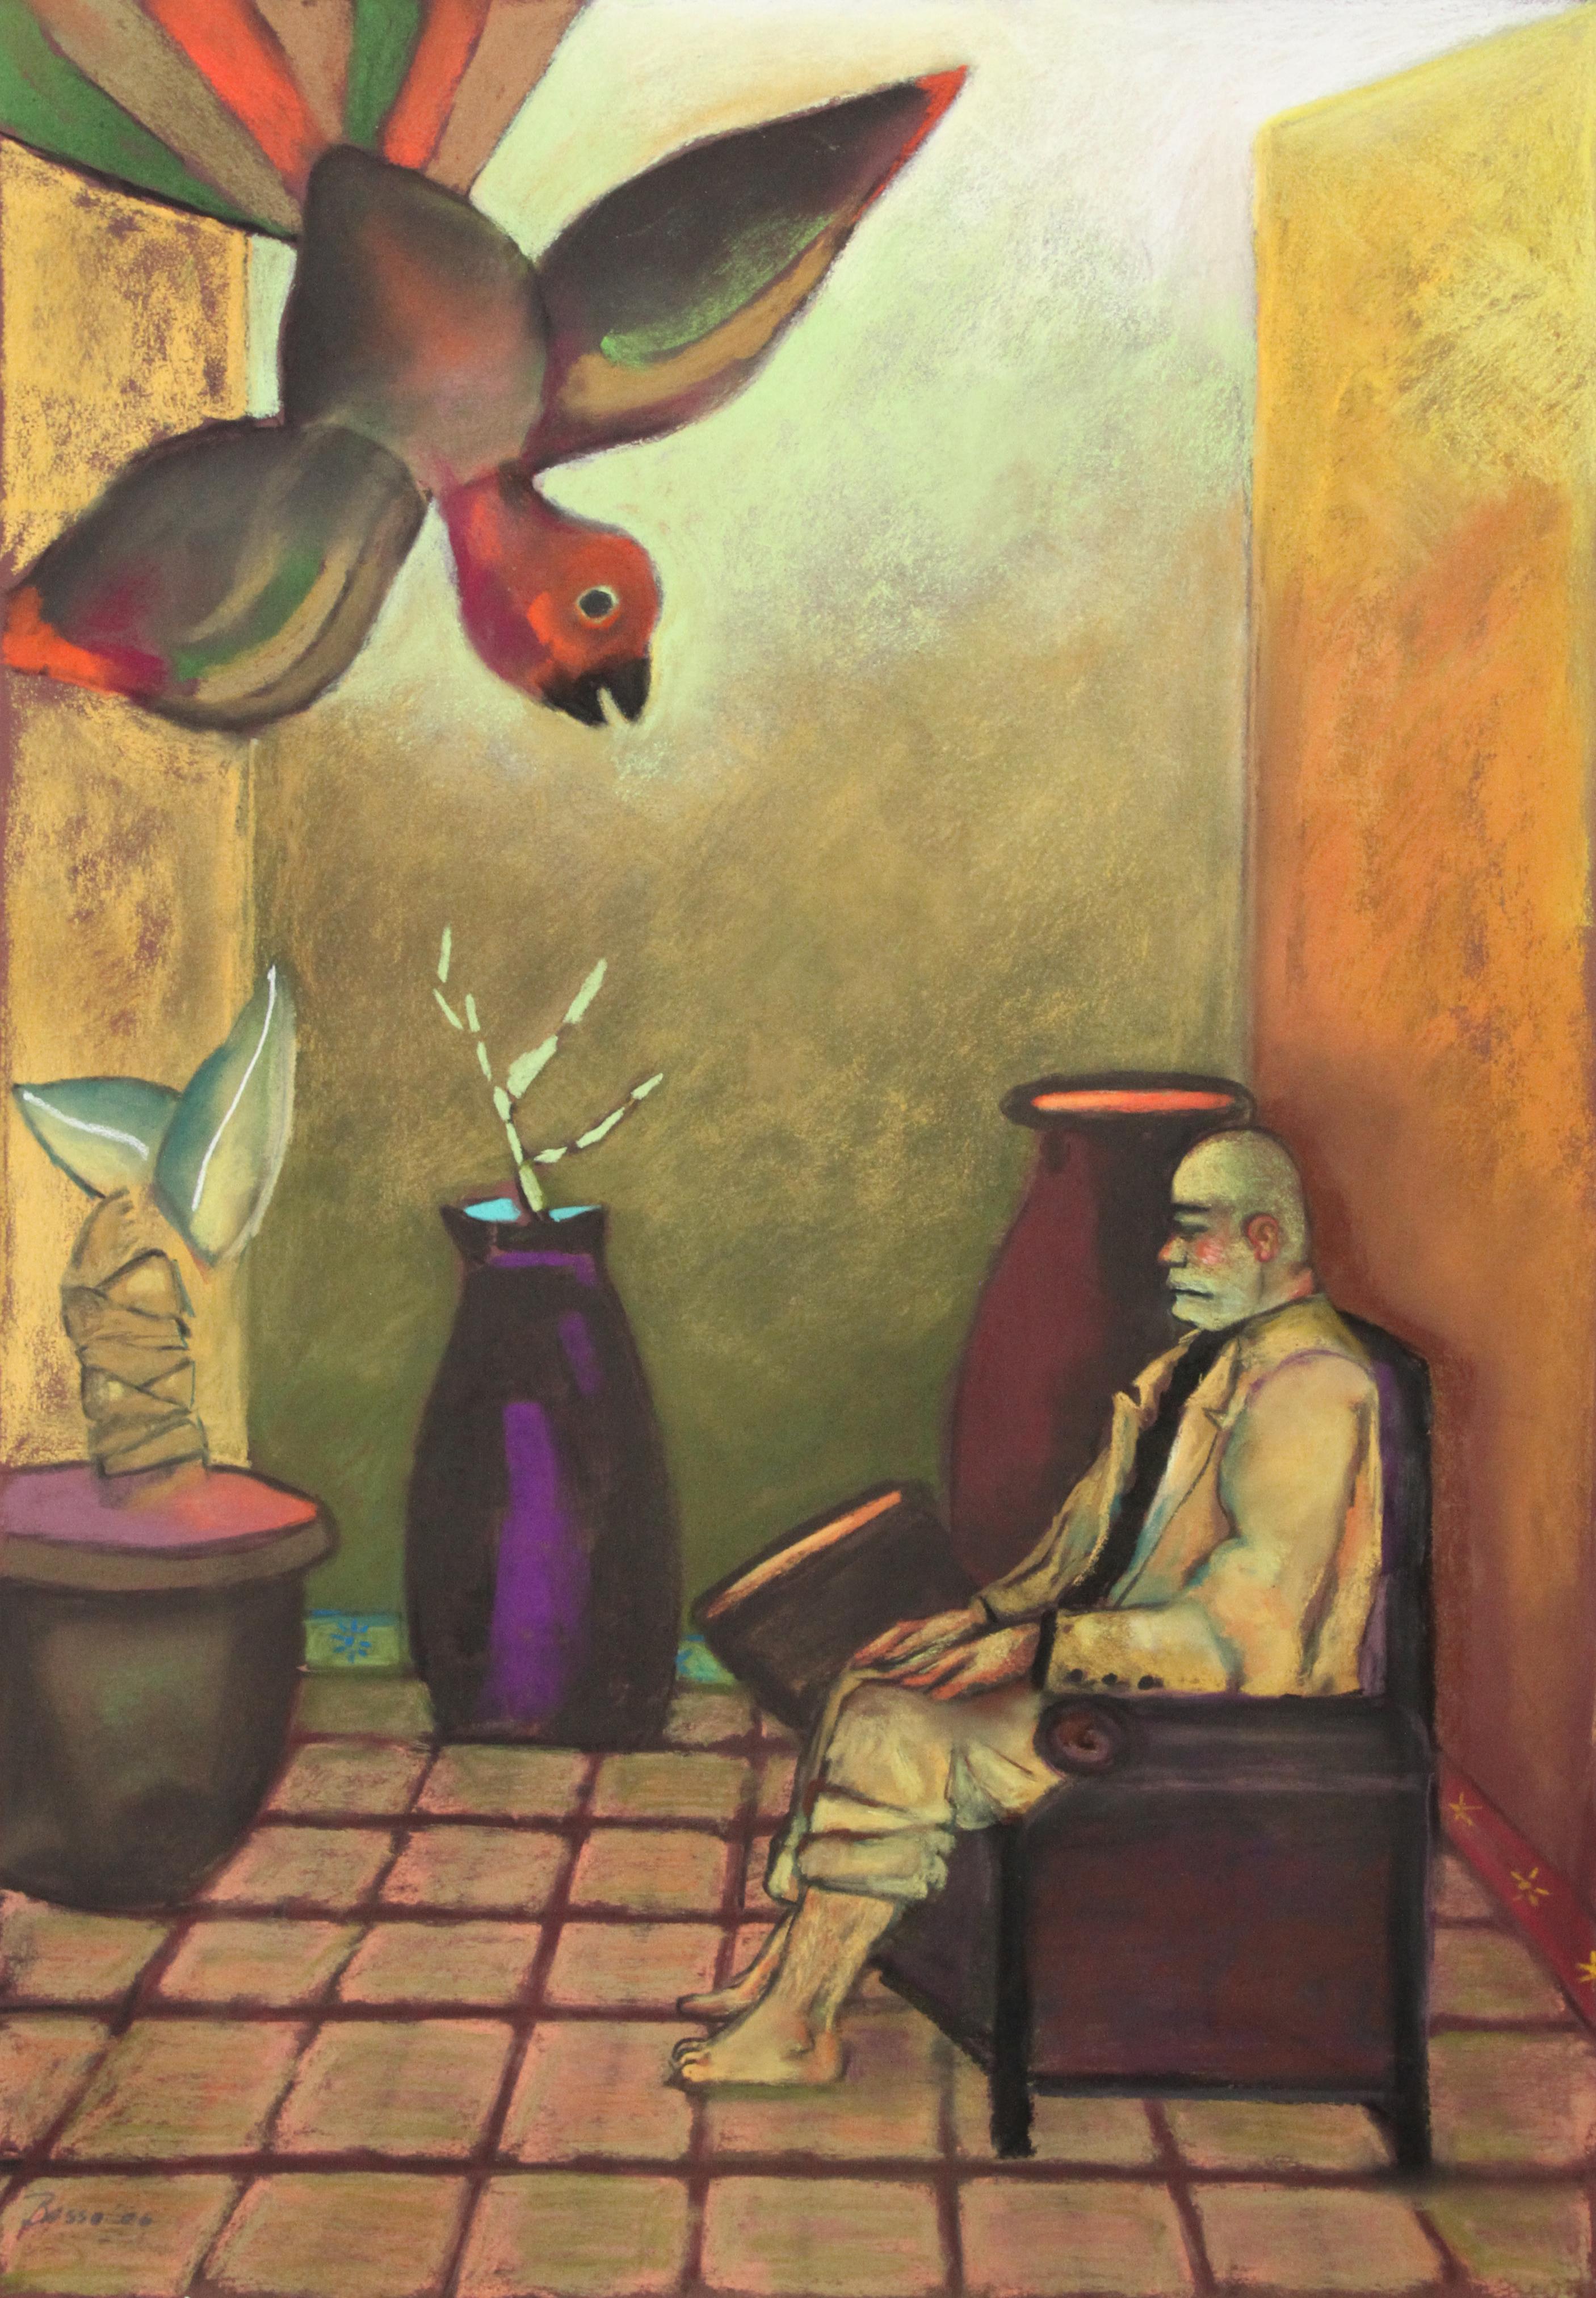 Stephen Basso Interior Art - Visitation man, bird,  spiritual theme warm colors interior space